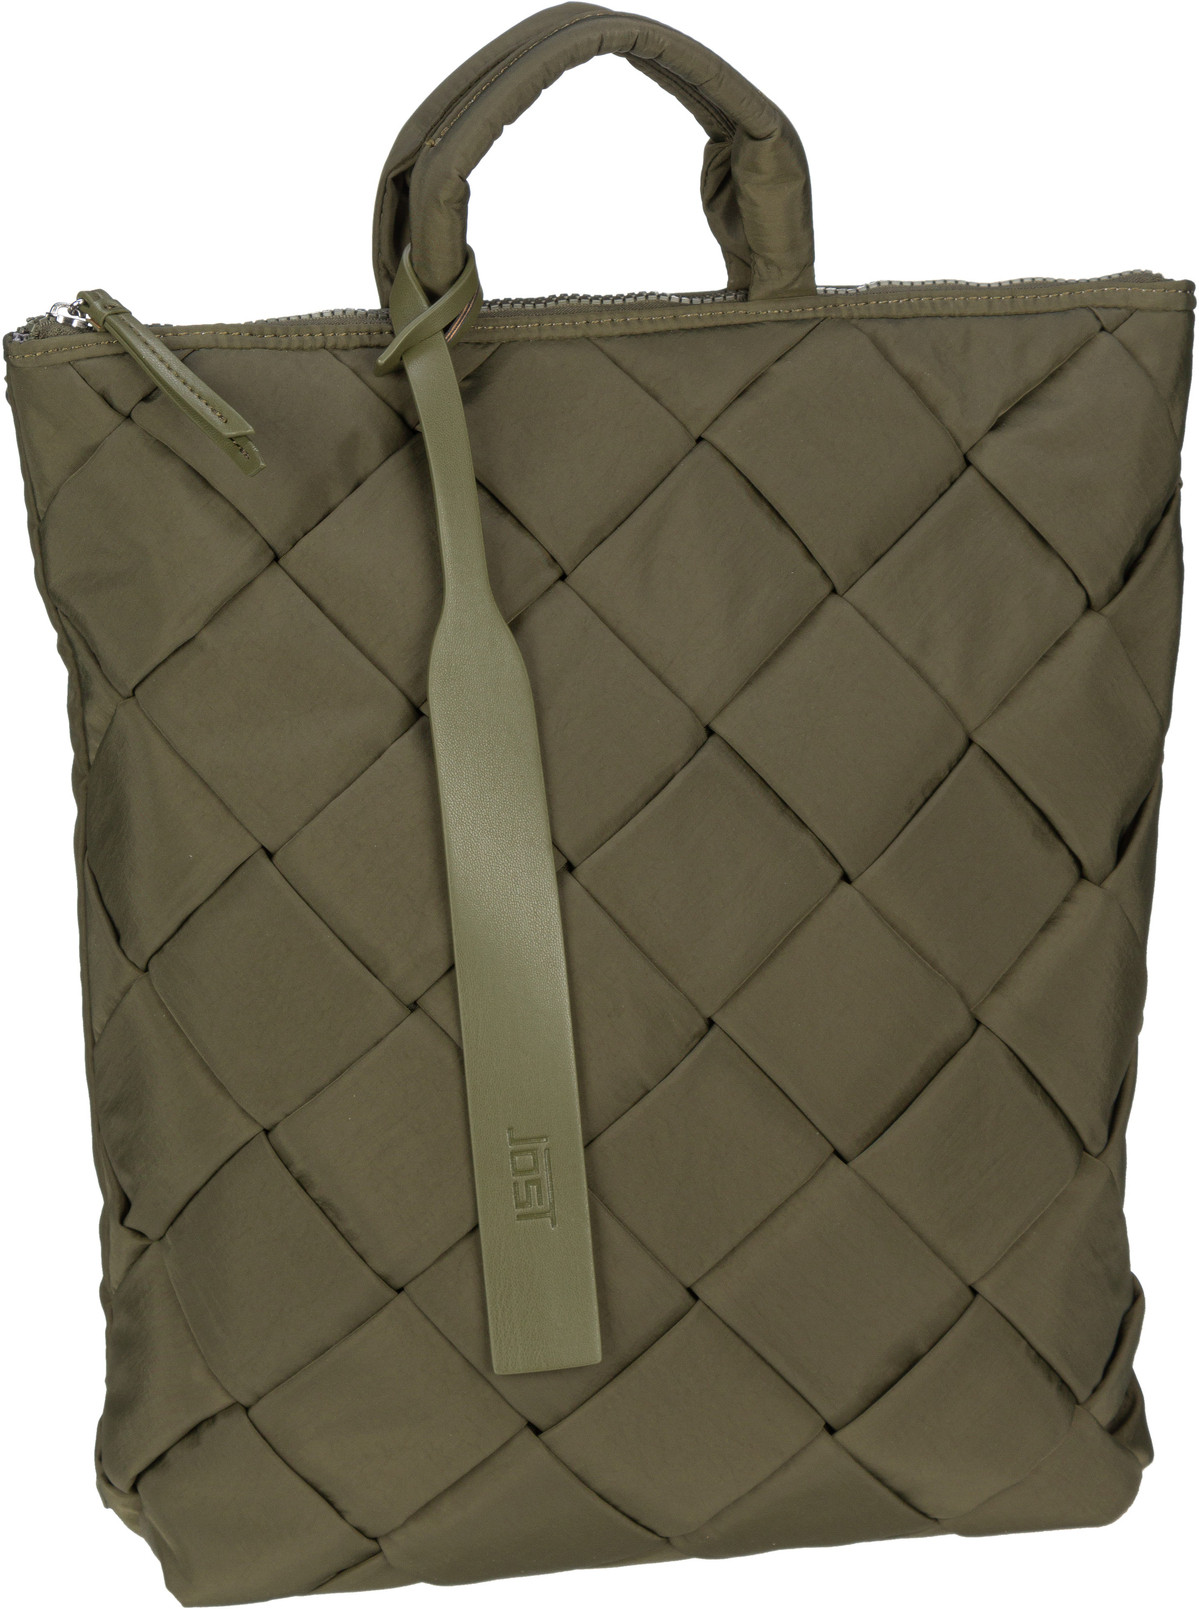 Jost Jost Nora X-Change Bag S in Braun (17.3 Liter), Rucksack / Backpack